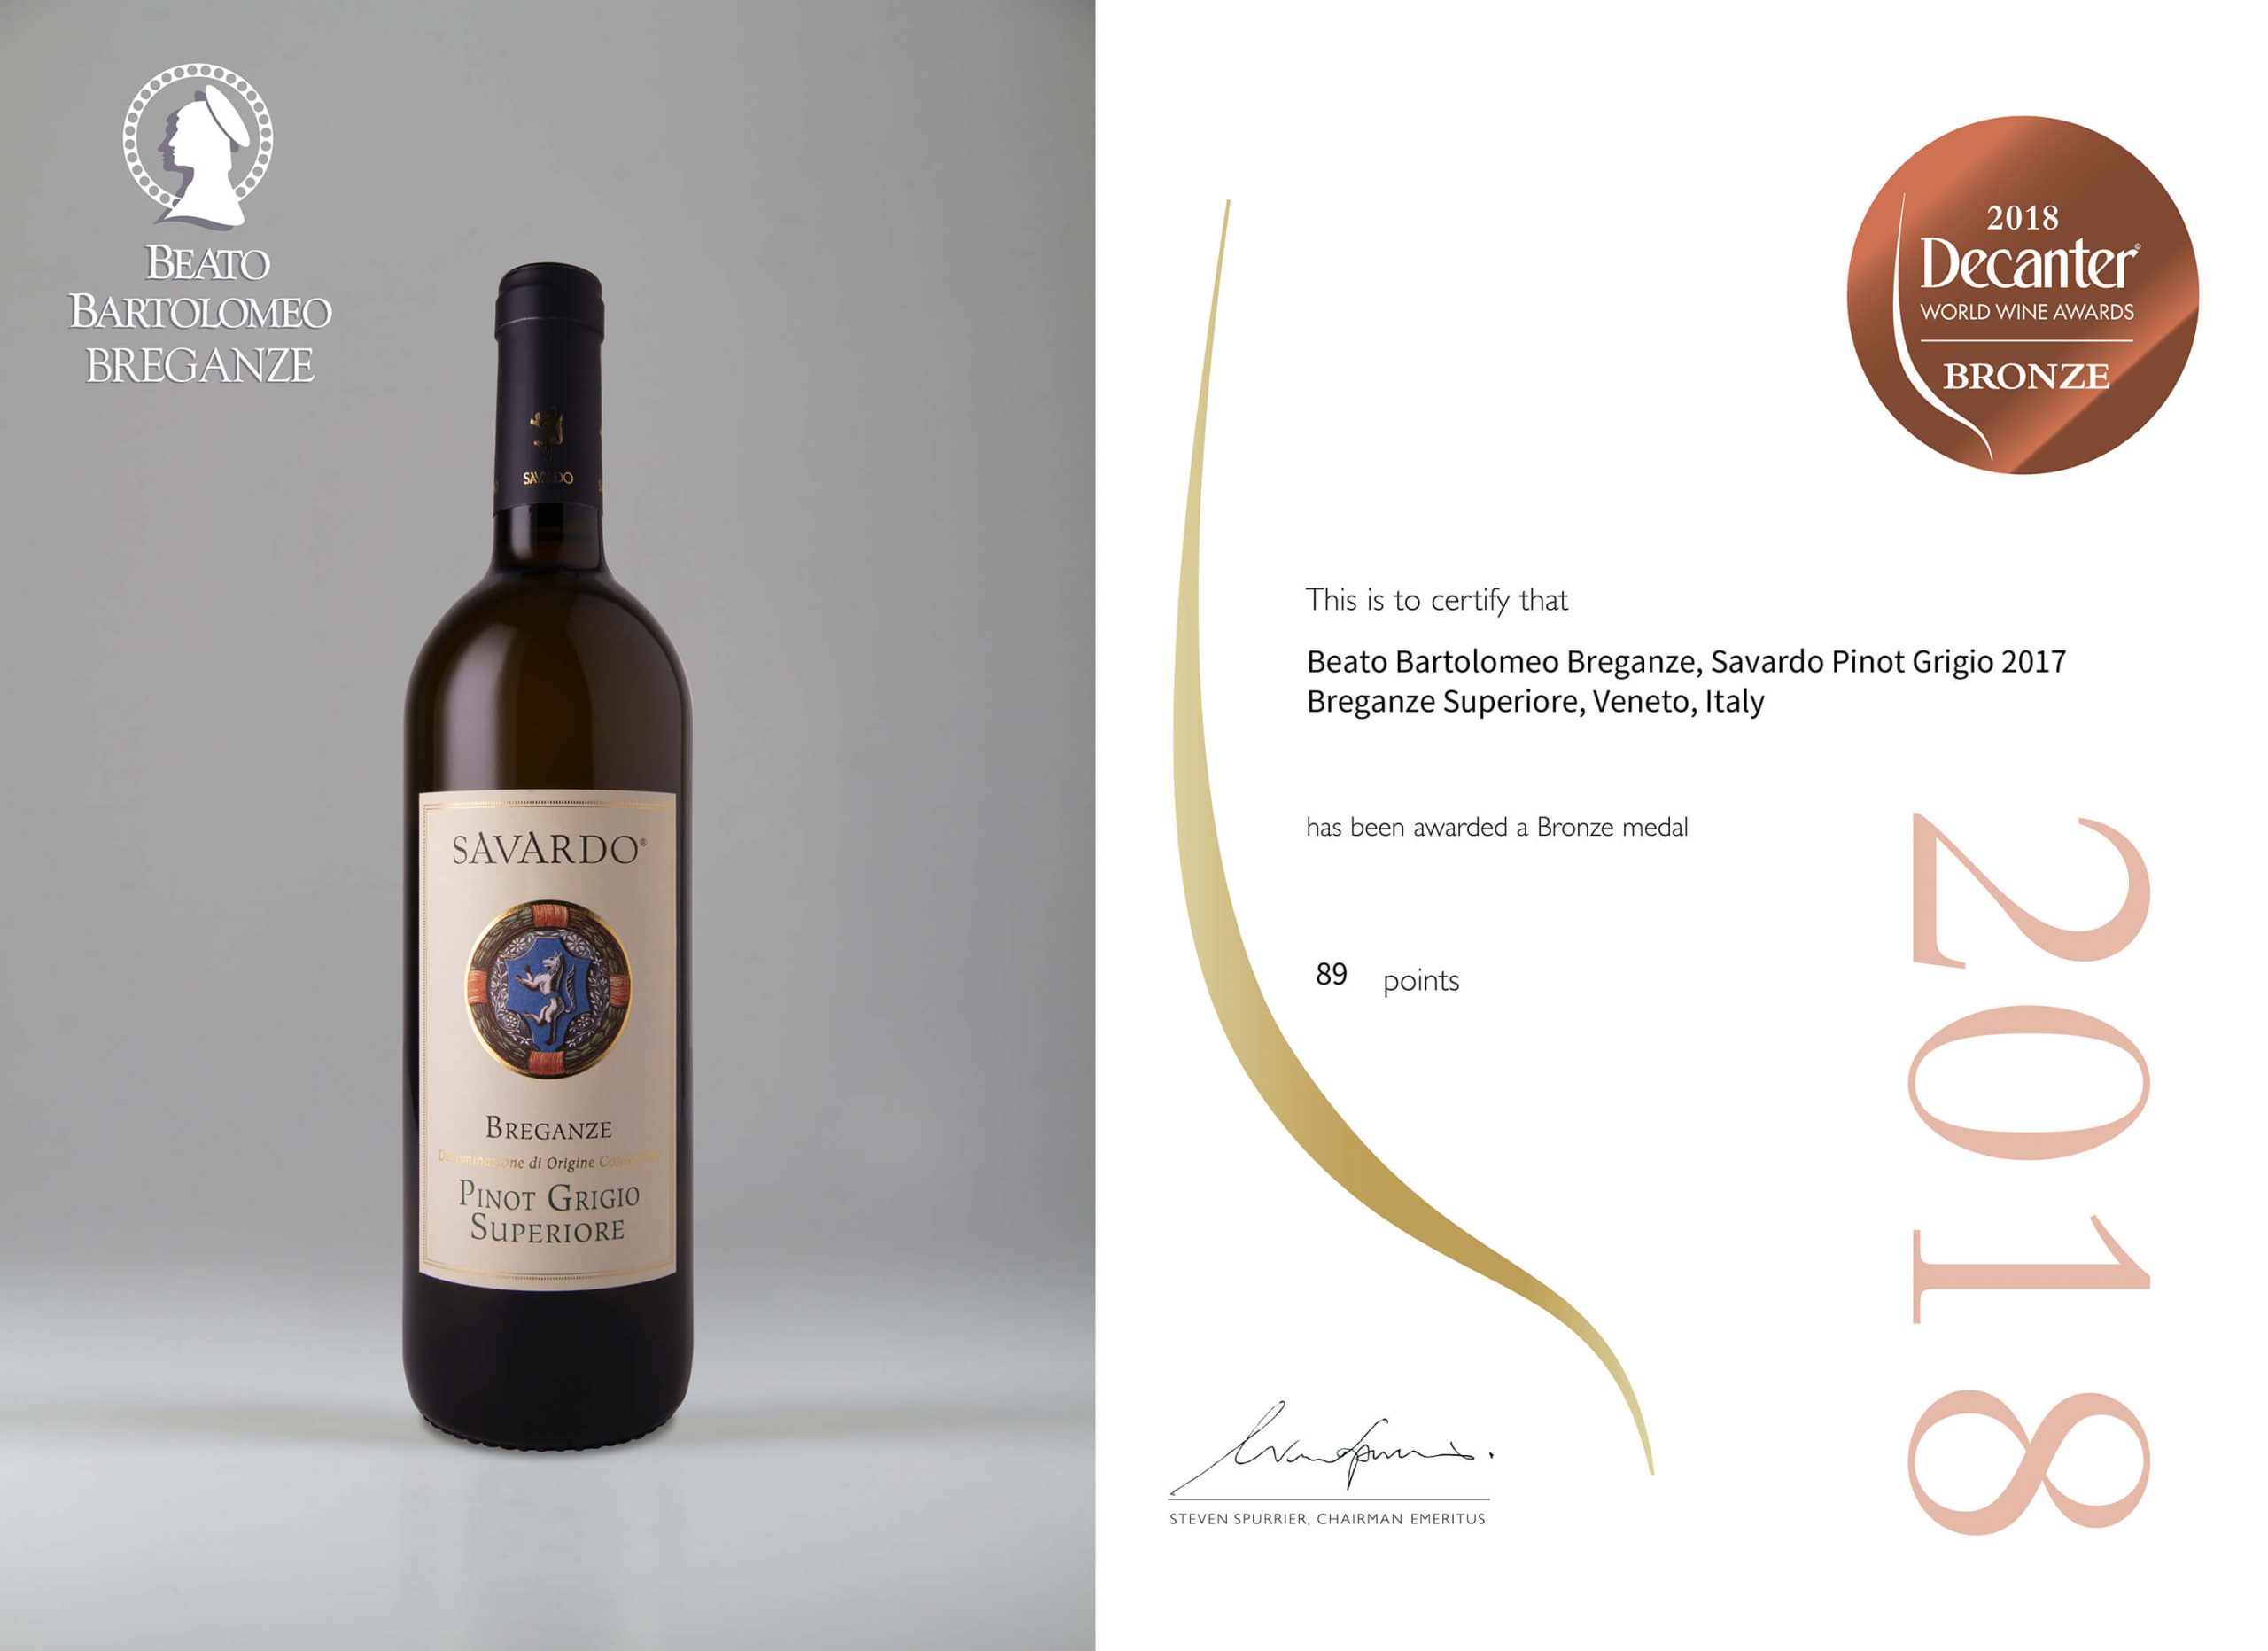 Pinot Grigio Breganze DOC Superiore “Savardo” Decanter World Wine Awards 2018